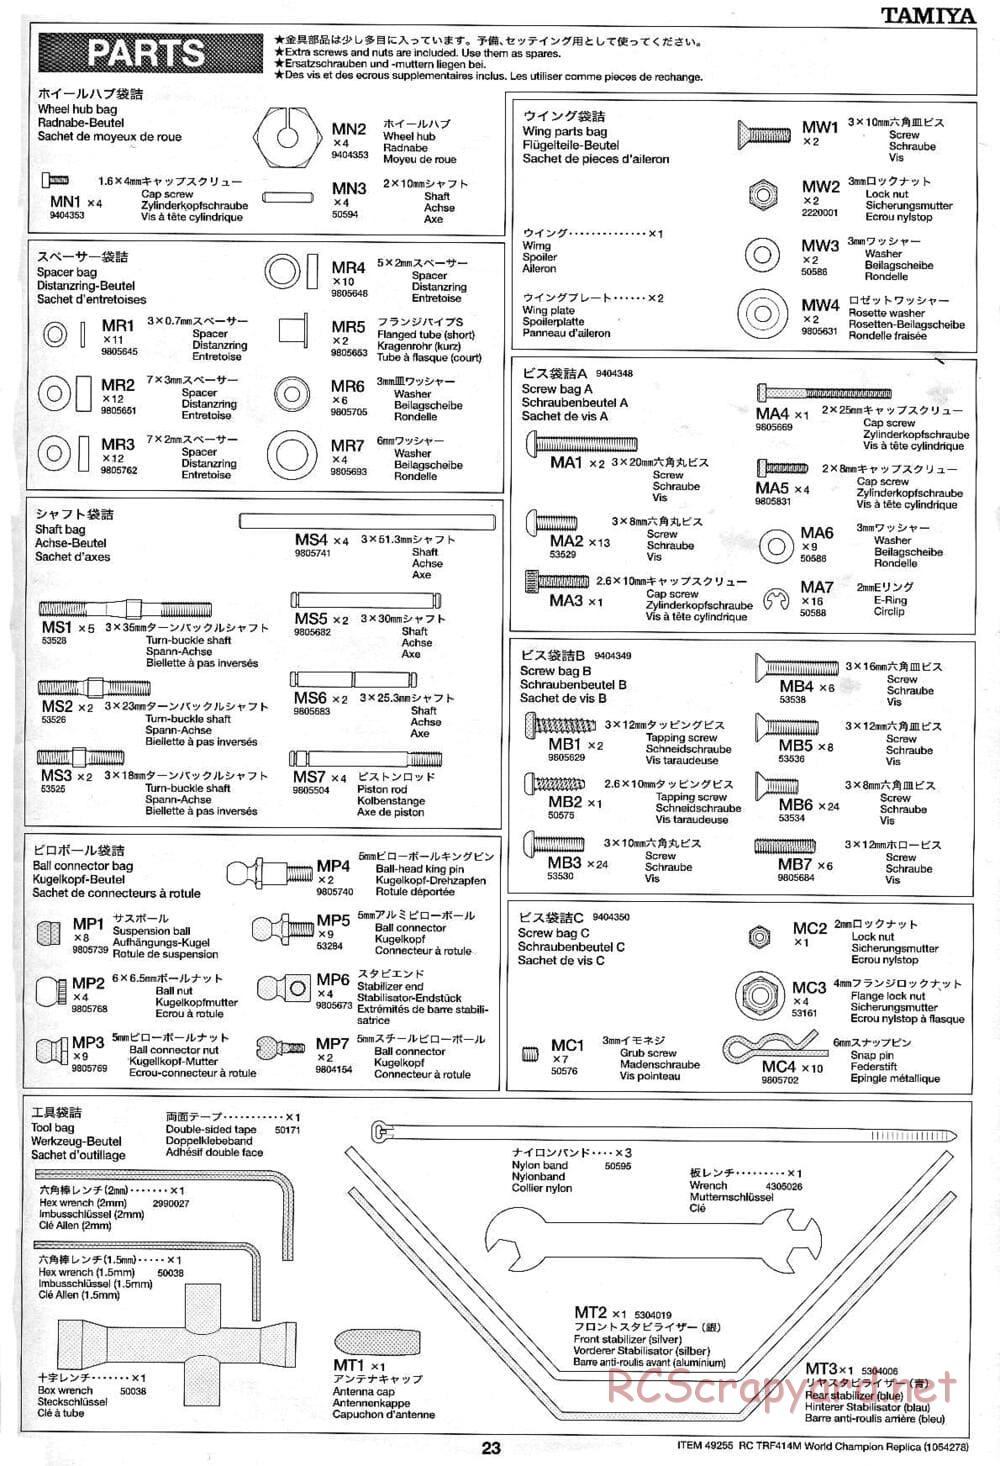 Tamiya - TRF414M World Champion Replica Chassis - Manual - Page 23